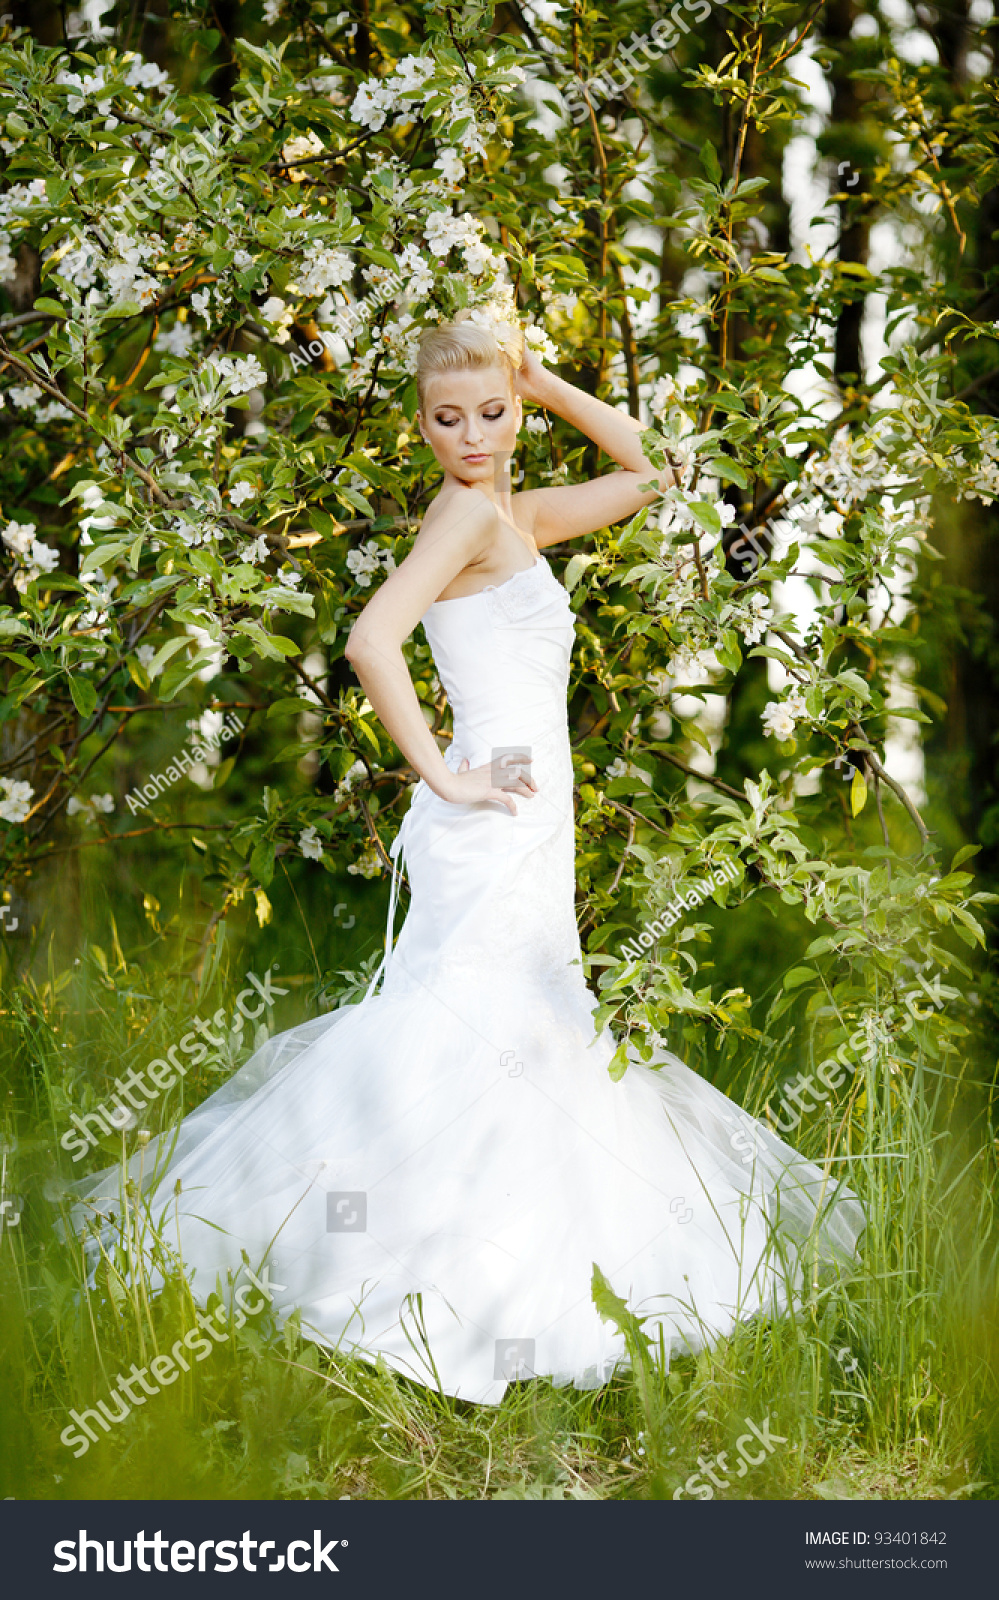 Photos Shutterstock Beautiful Bride Photos 20